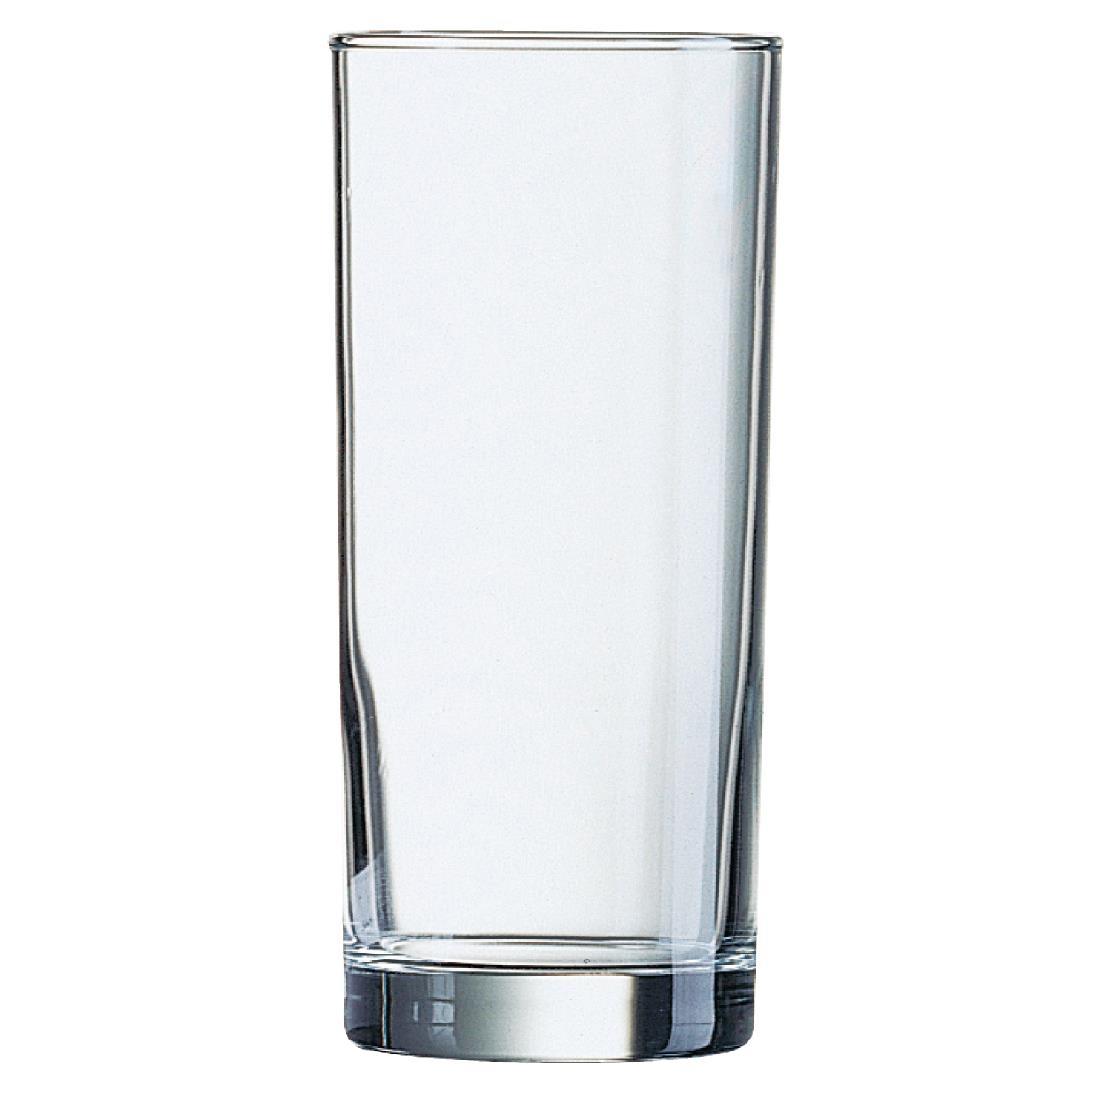 Arcoroc Hi Ball Glasses 340ml (Pack of 48) - S060  - 2